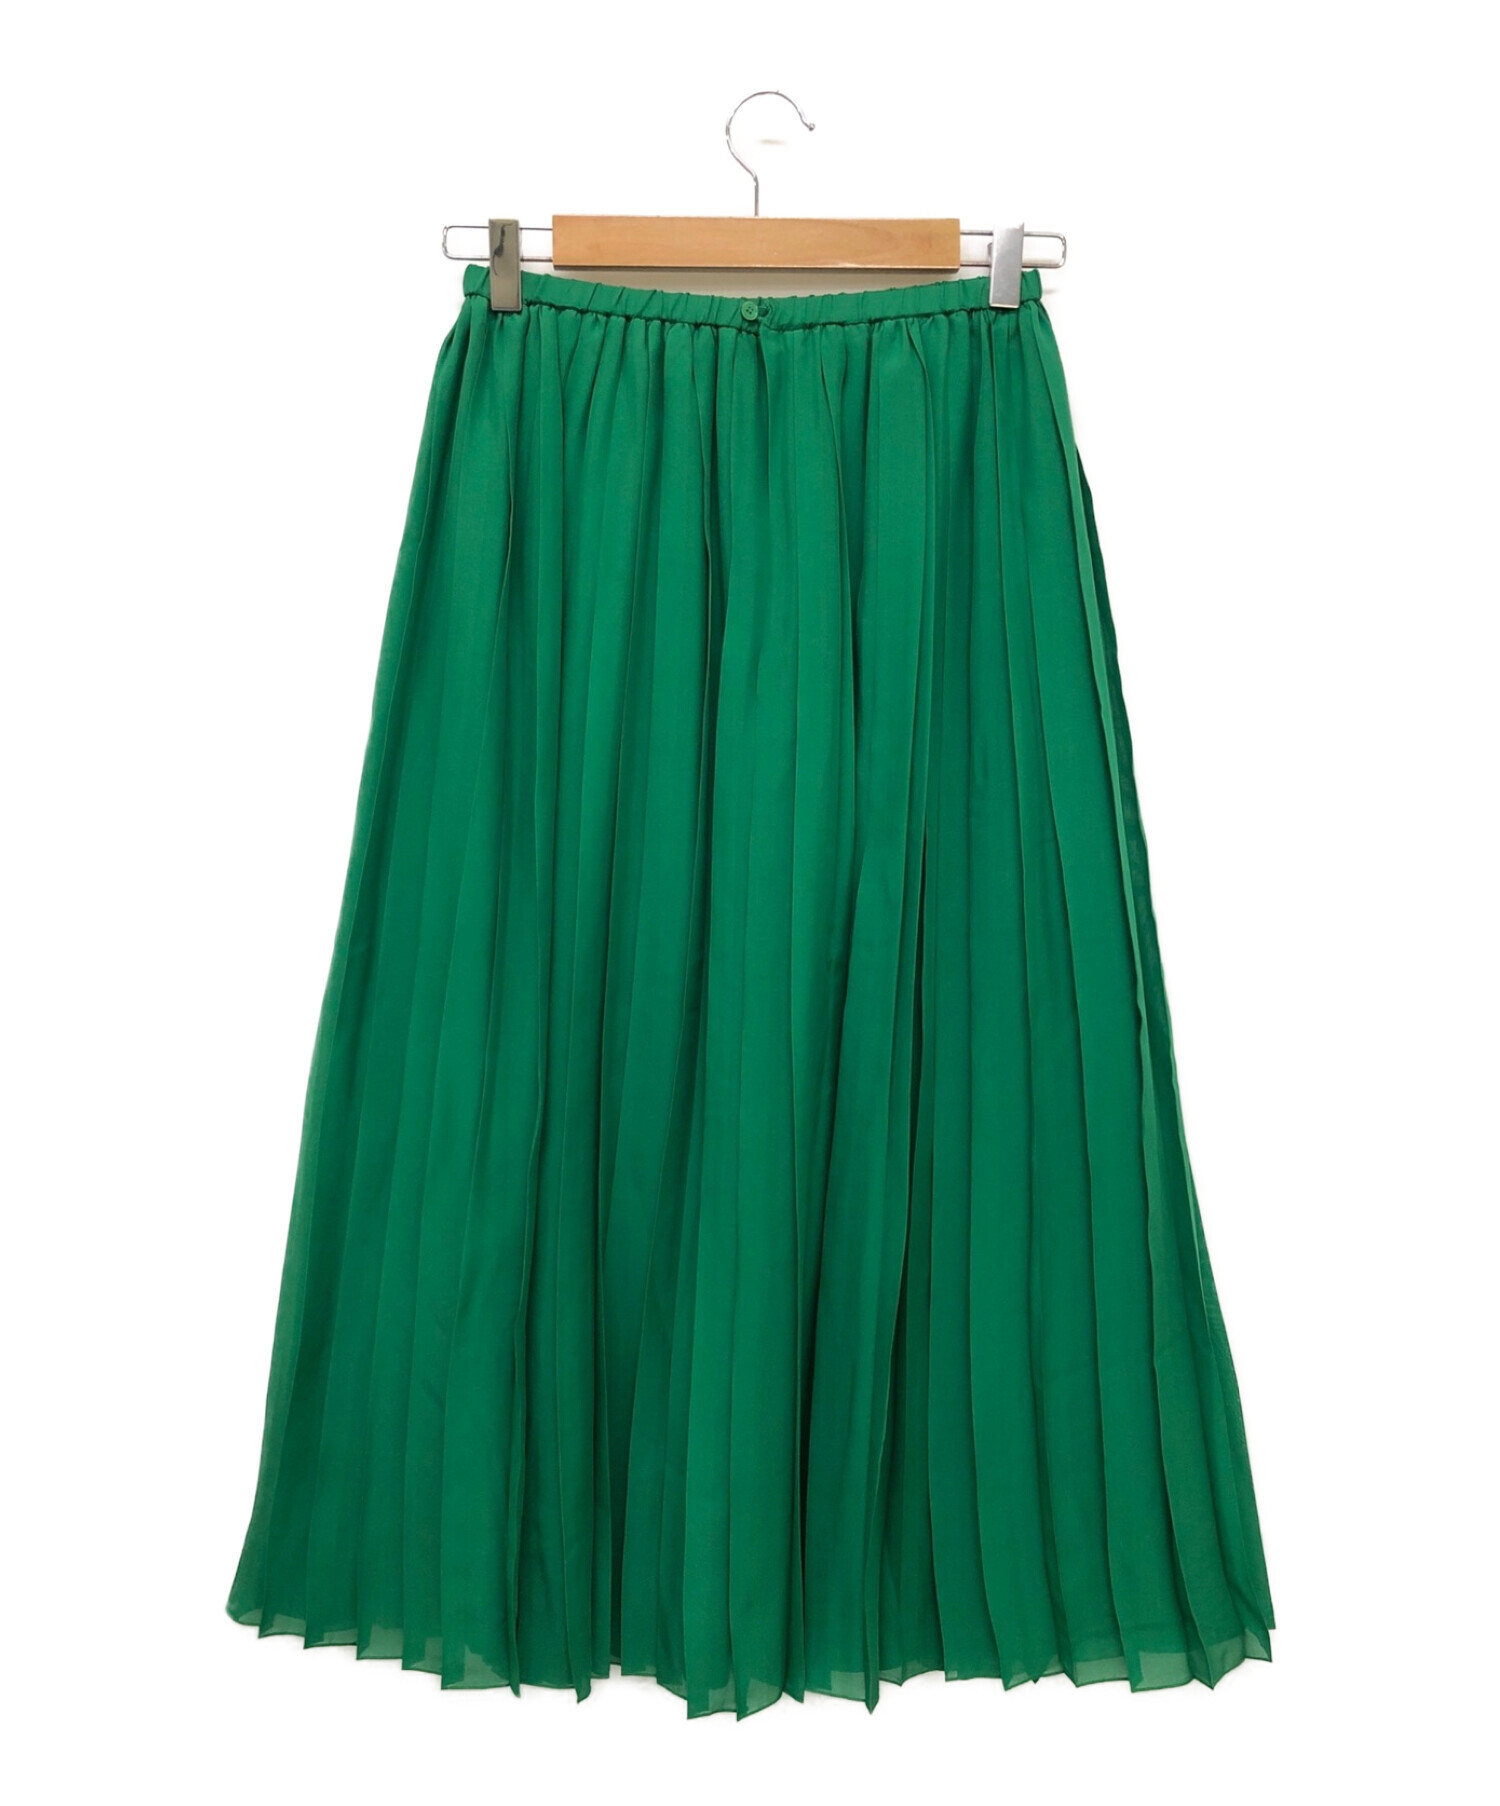 BLAMINK (ブラミンク) P SI PLEAT / シルクプリーツスカート グリーン サイズ:36